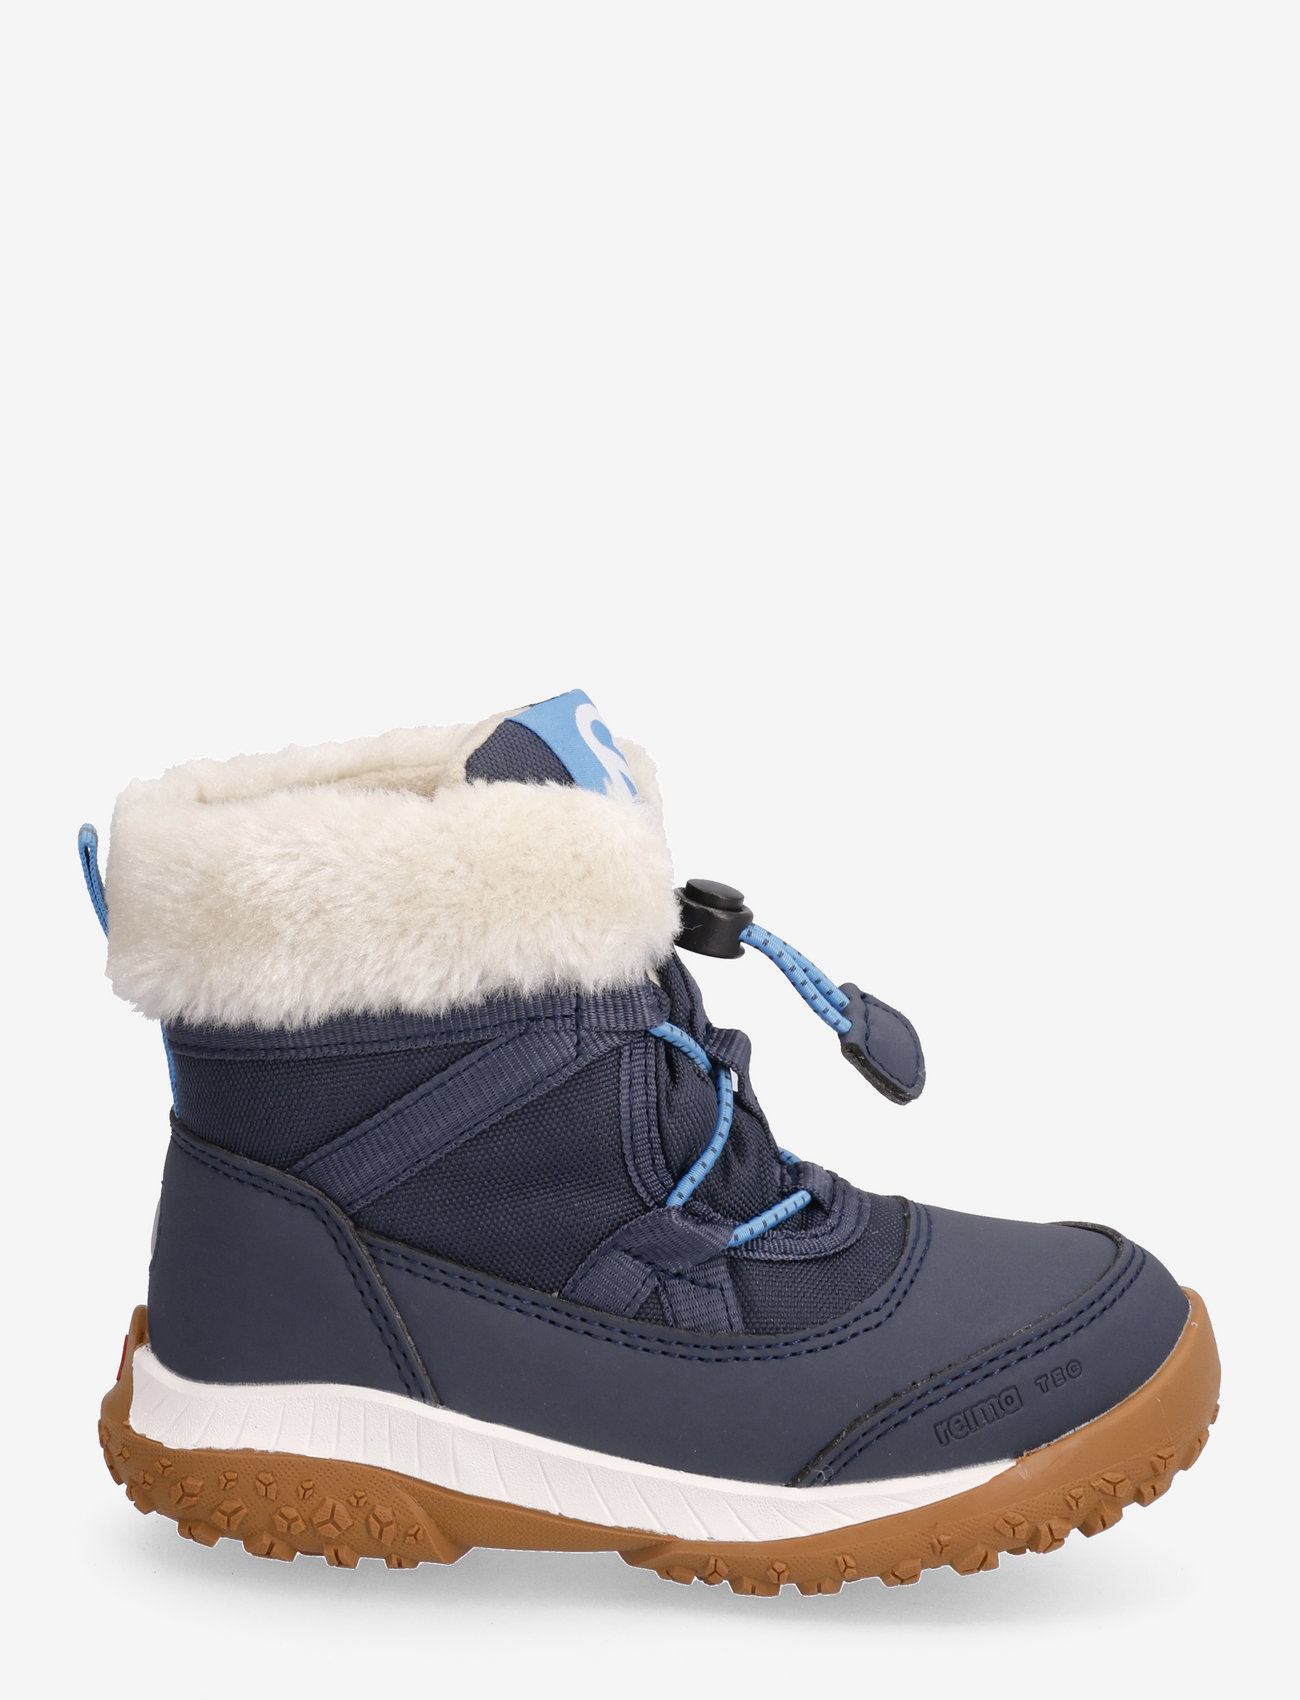 Reima - Toddlers' Winter boots Samooja - kinder - navy - 1